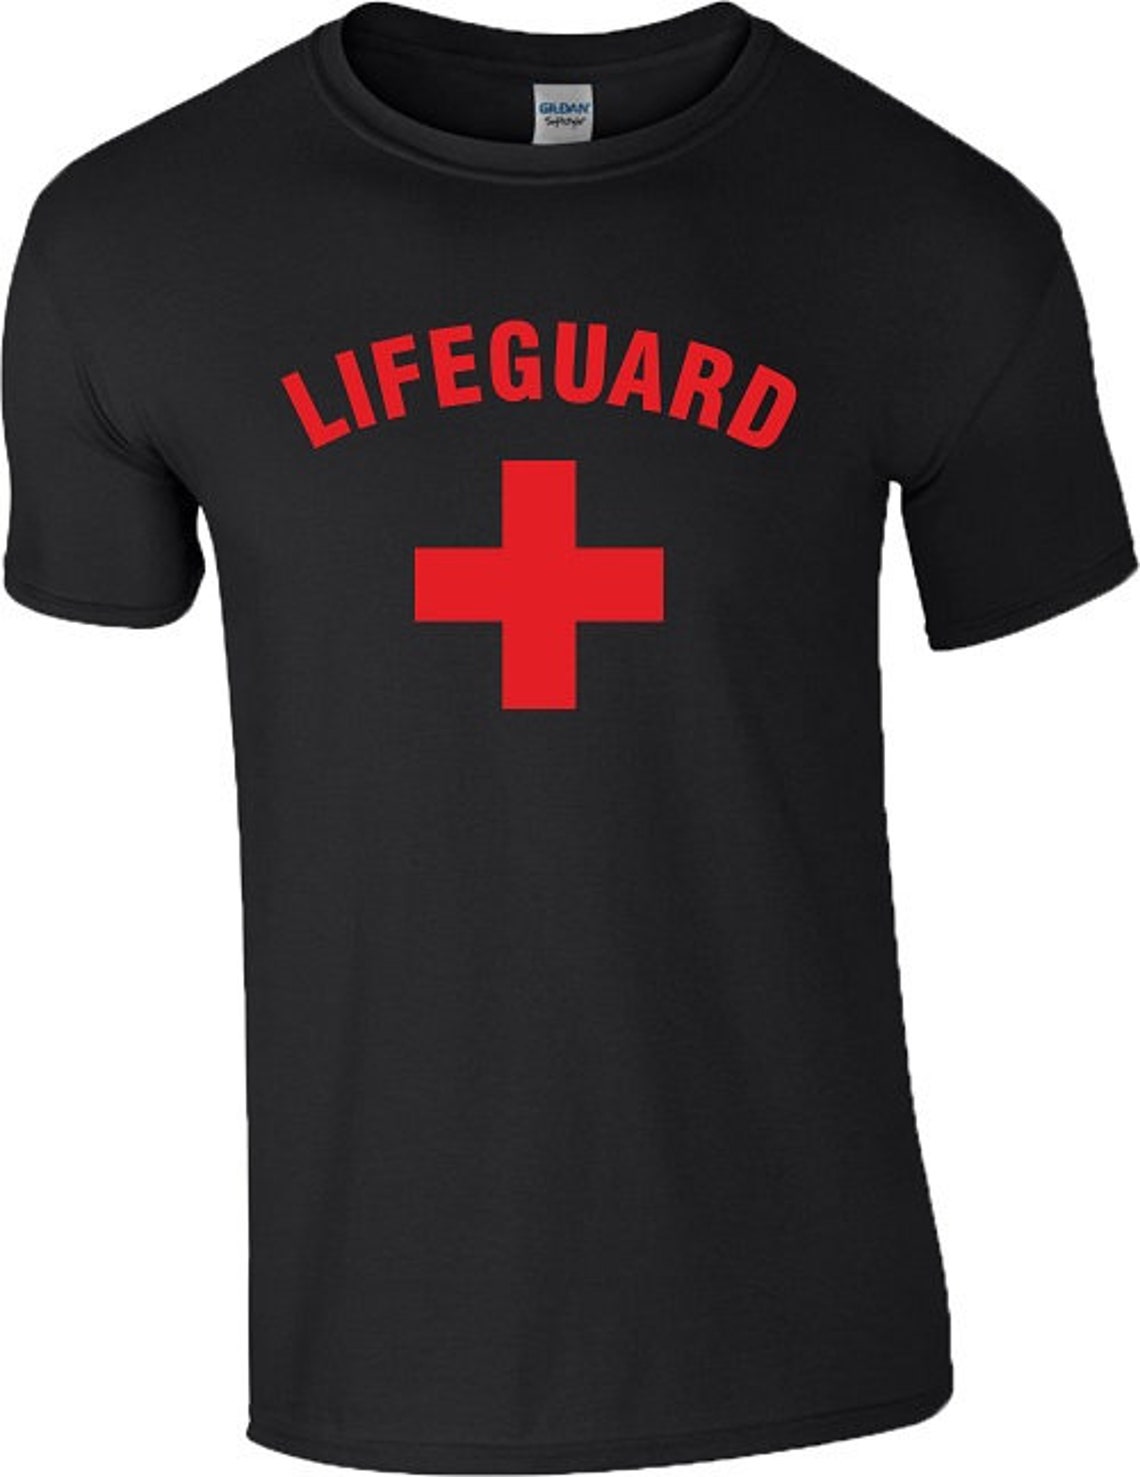 Lifeguard Cross T Shirt Life Saver Fancy Dress Beach Party | Etsy